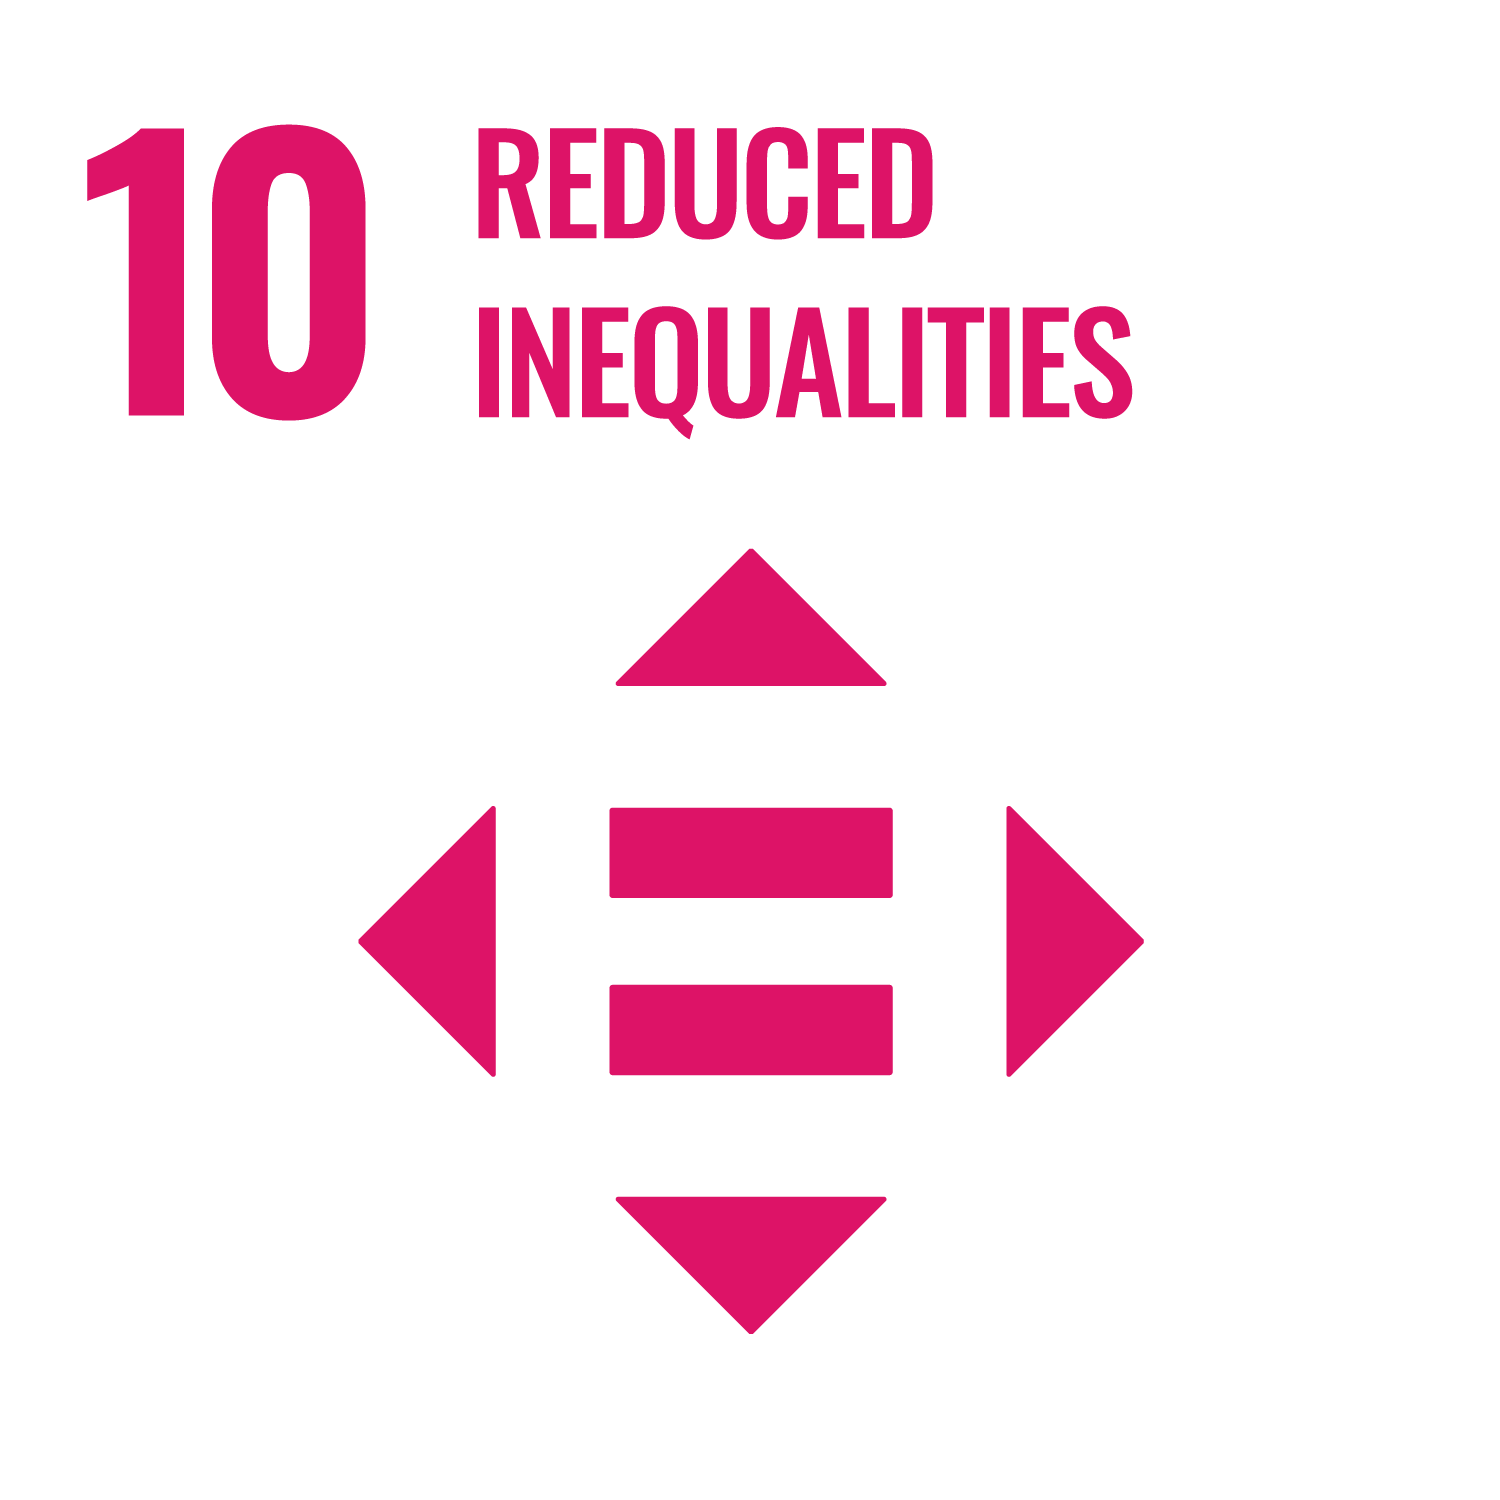 UN Sustainable Development Goal 10 "Reduced Inequalities"